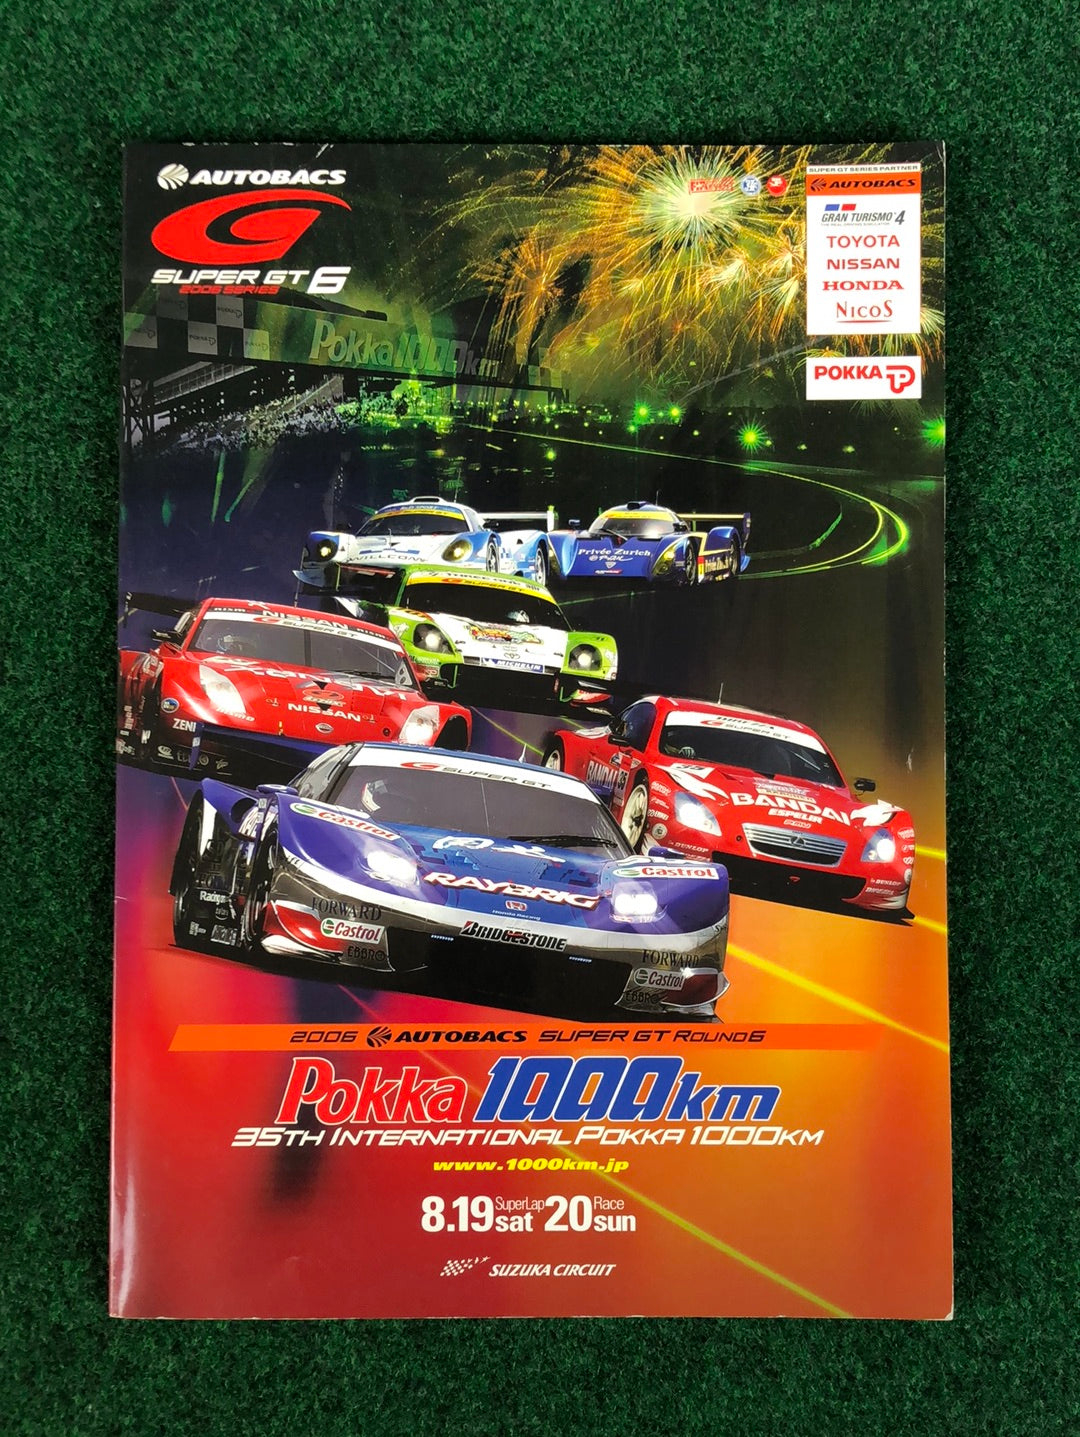 2006 Autobacs Super GT Round 6 Pokka 1000km Suzuka Circuit Official Race Day Program